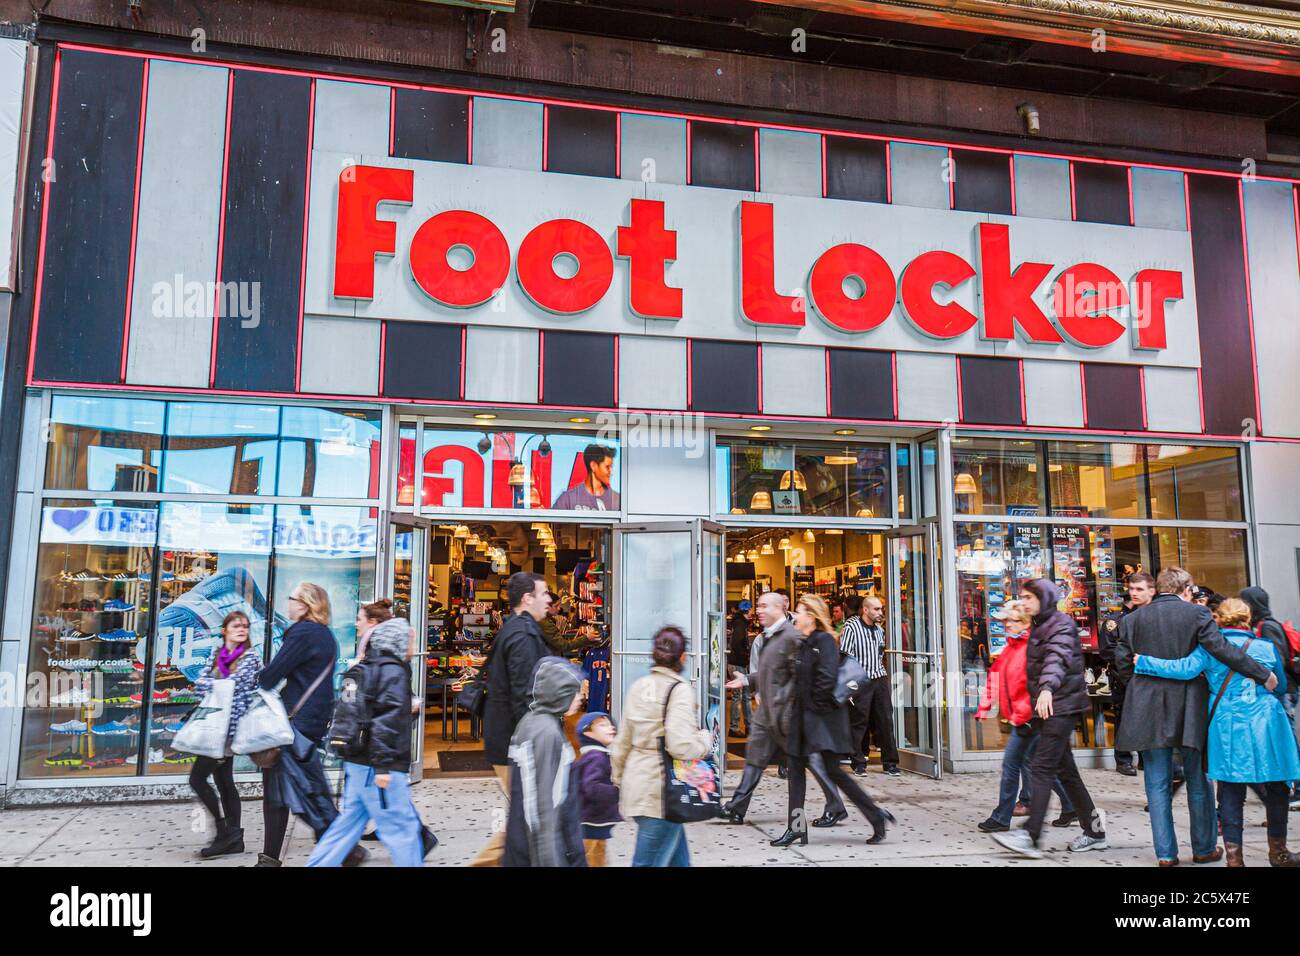 New York City Foot Locker Fotos e Imágenes de stock - Alamy